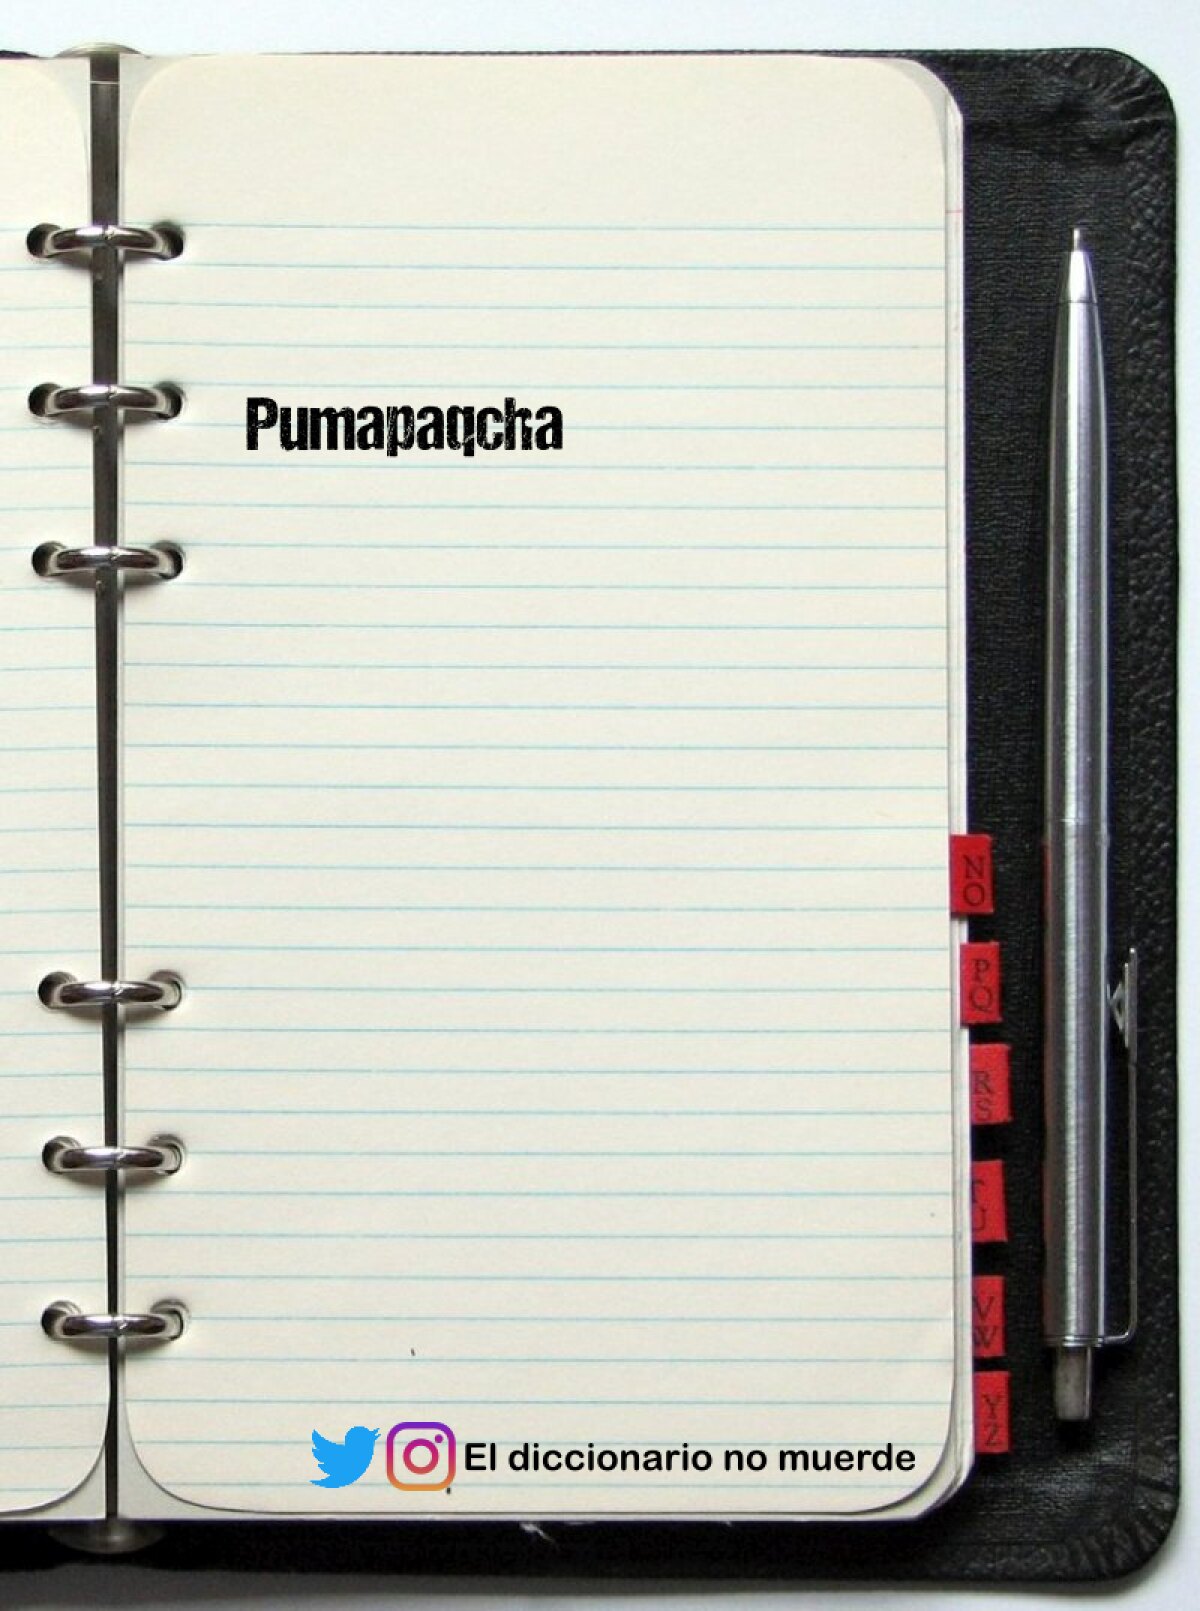 Pumapaqcha